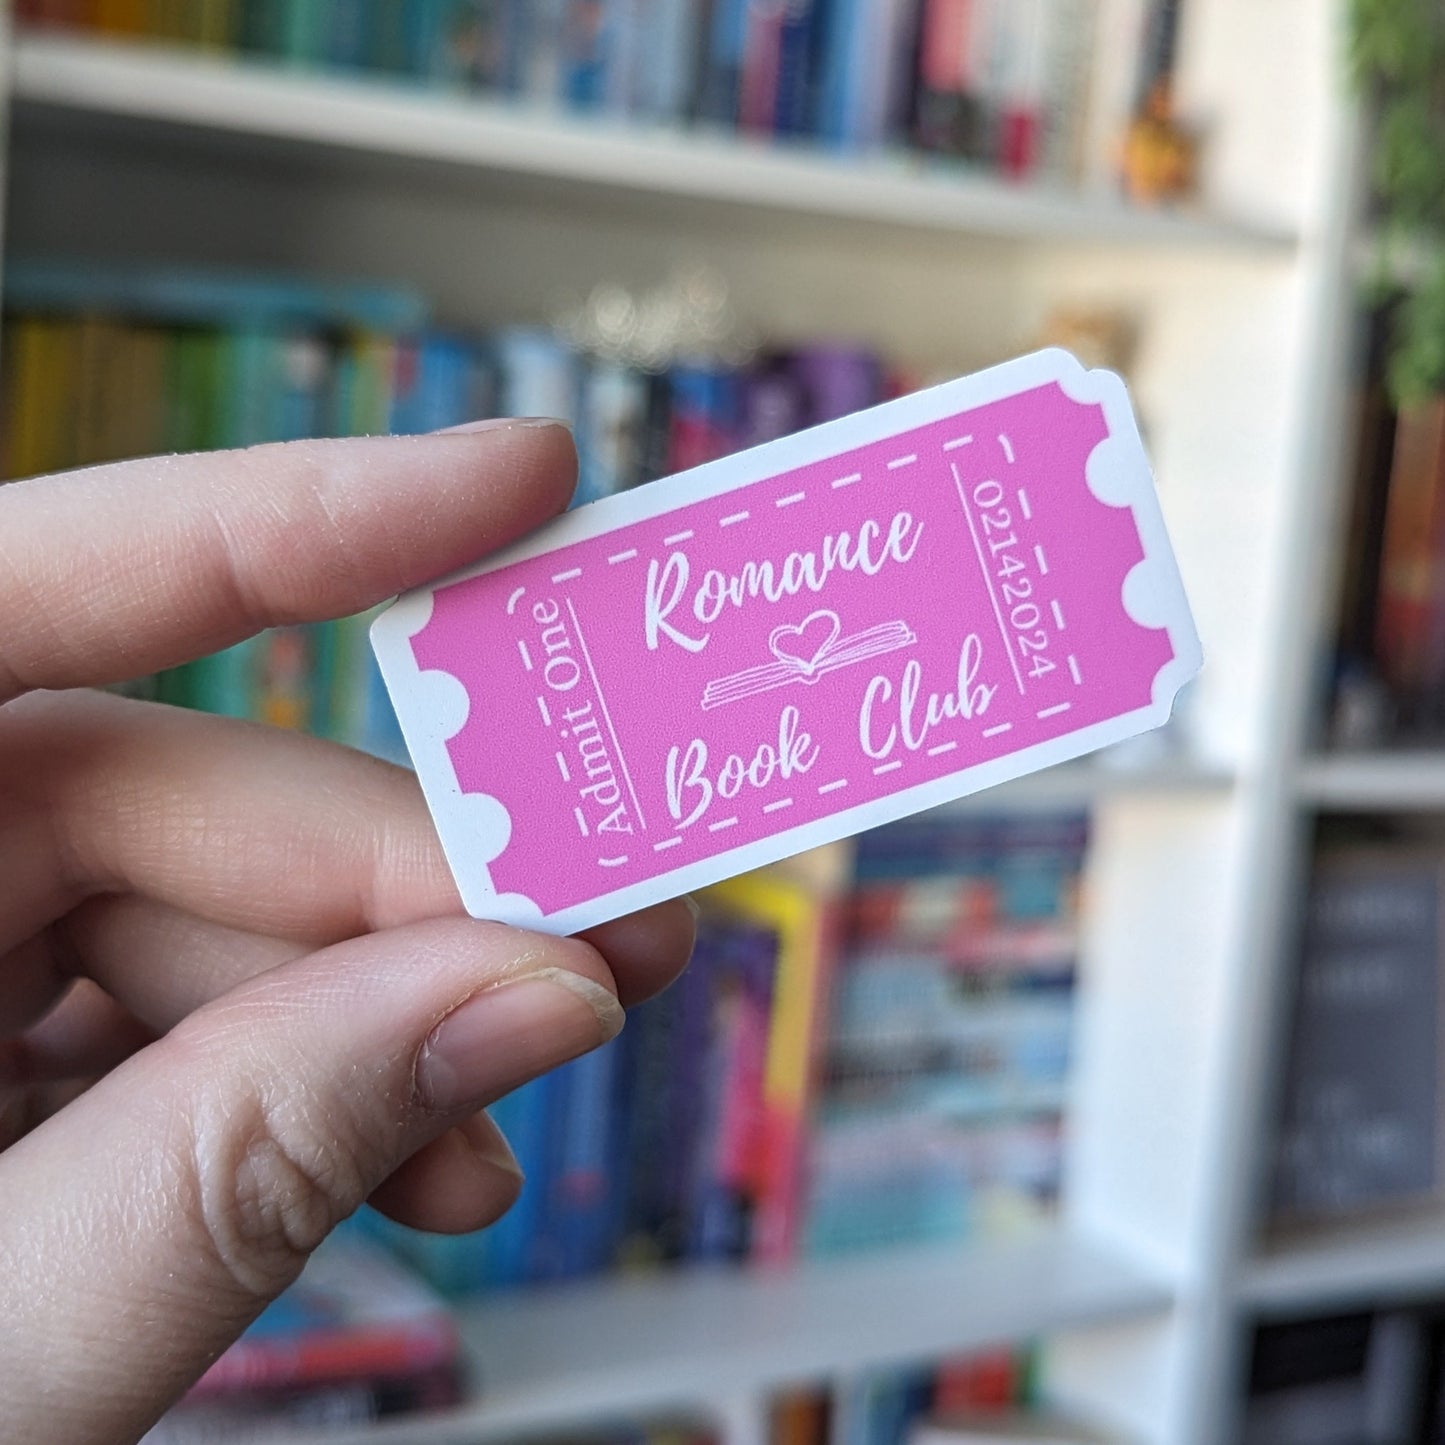 Romance Book Club Ticket Sticker